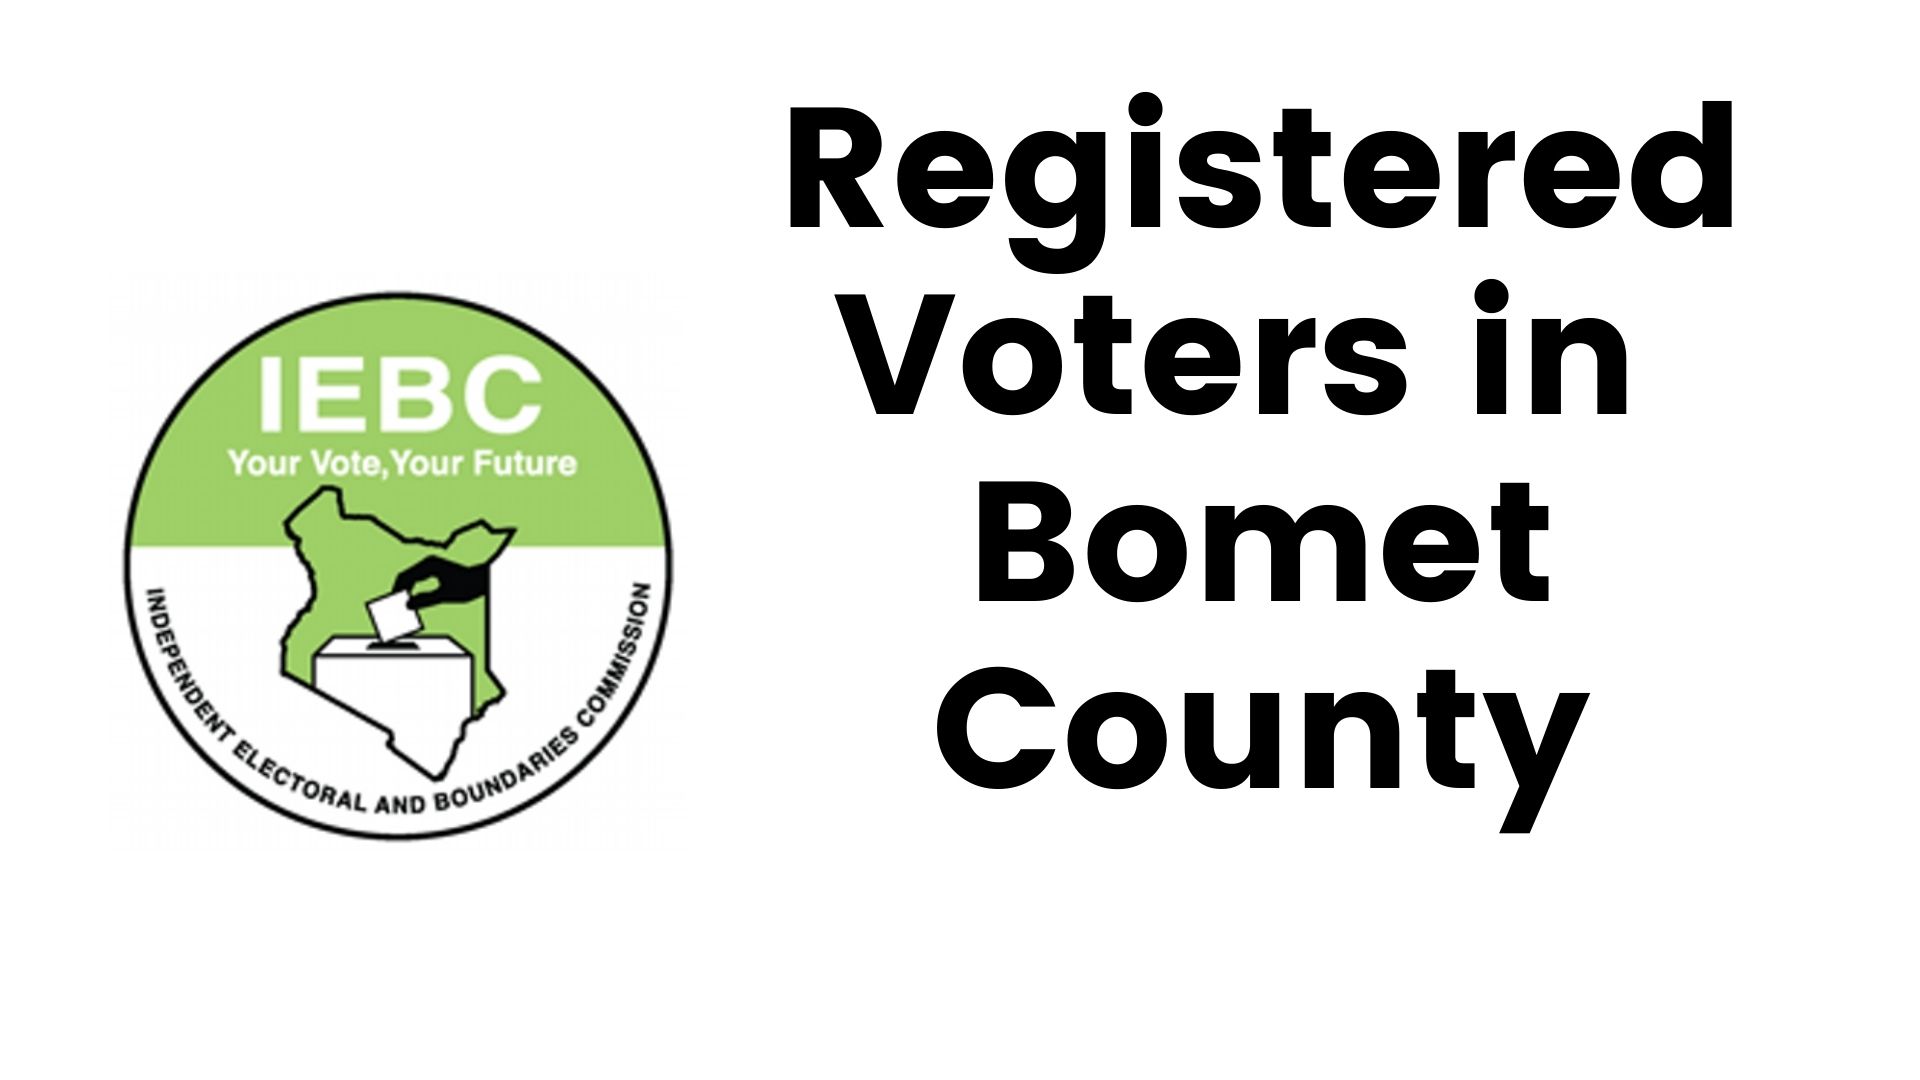 IEBC Bomet County Registered Voters